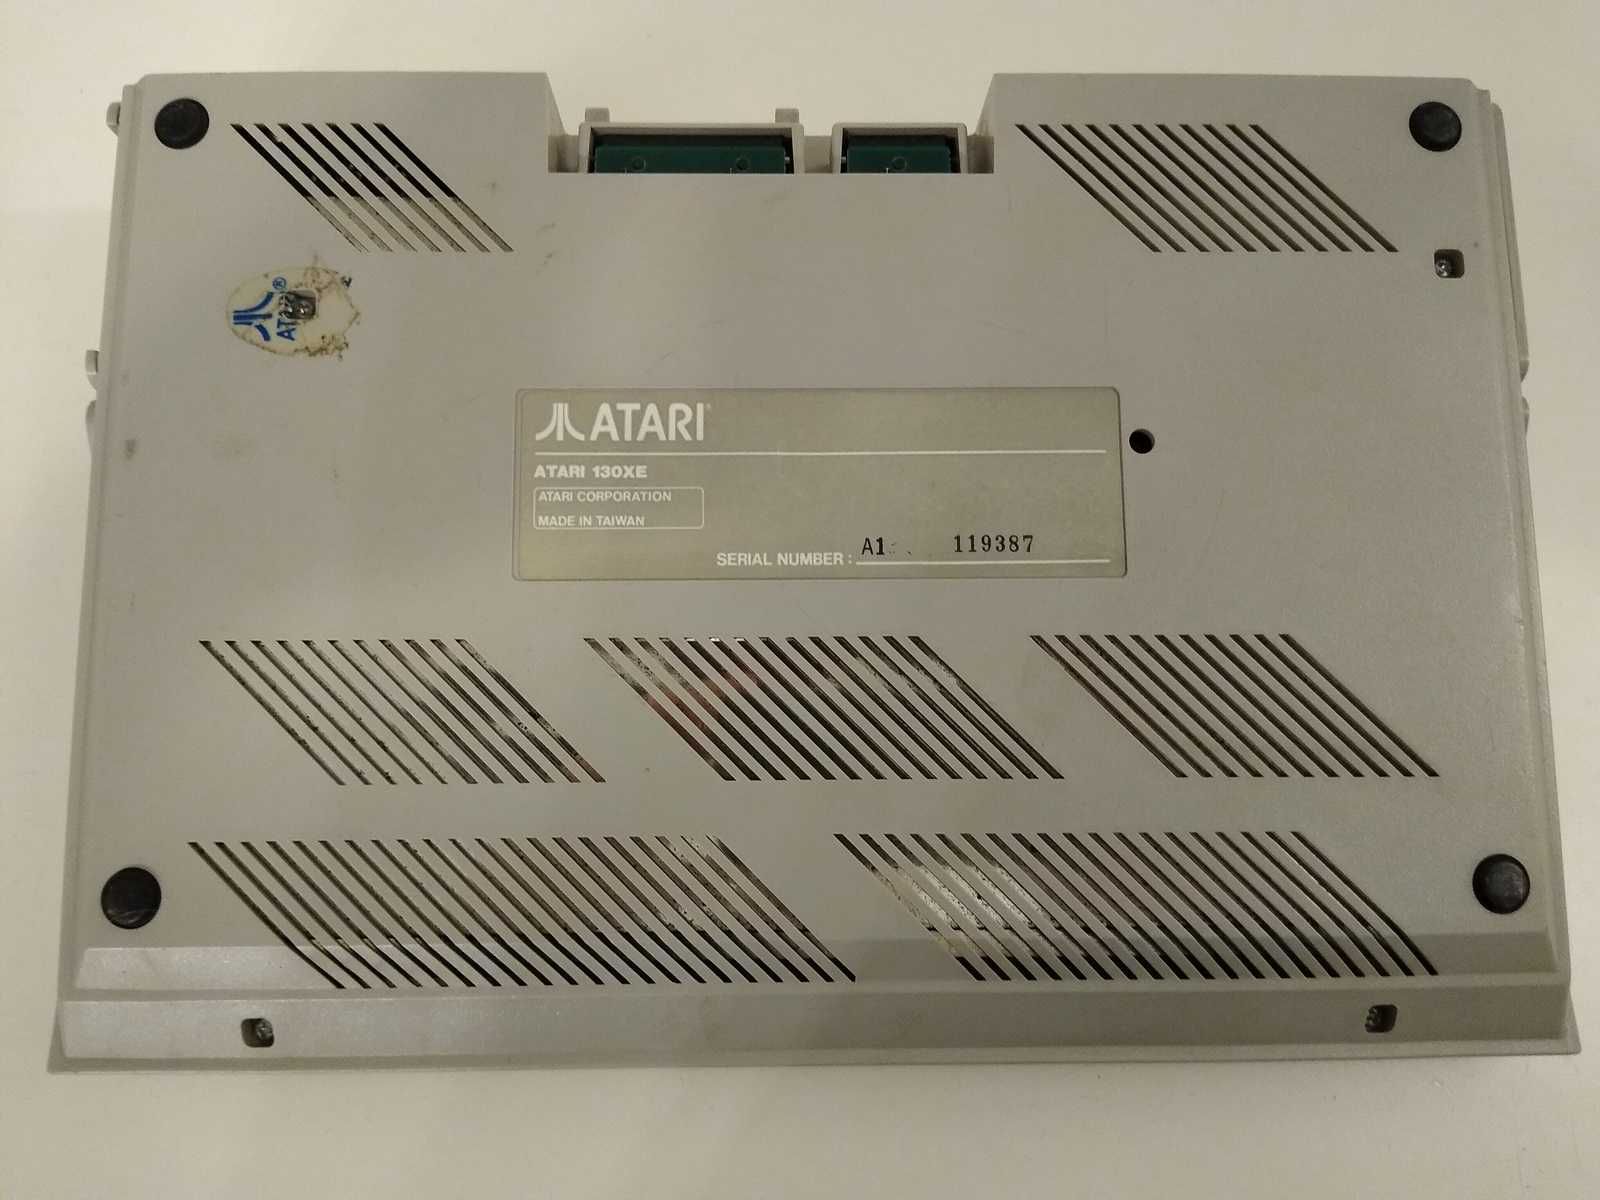 Atari 130xe plus Cartridge  Sprawne plus zasilacz